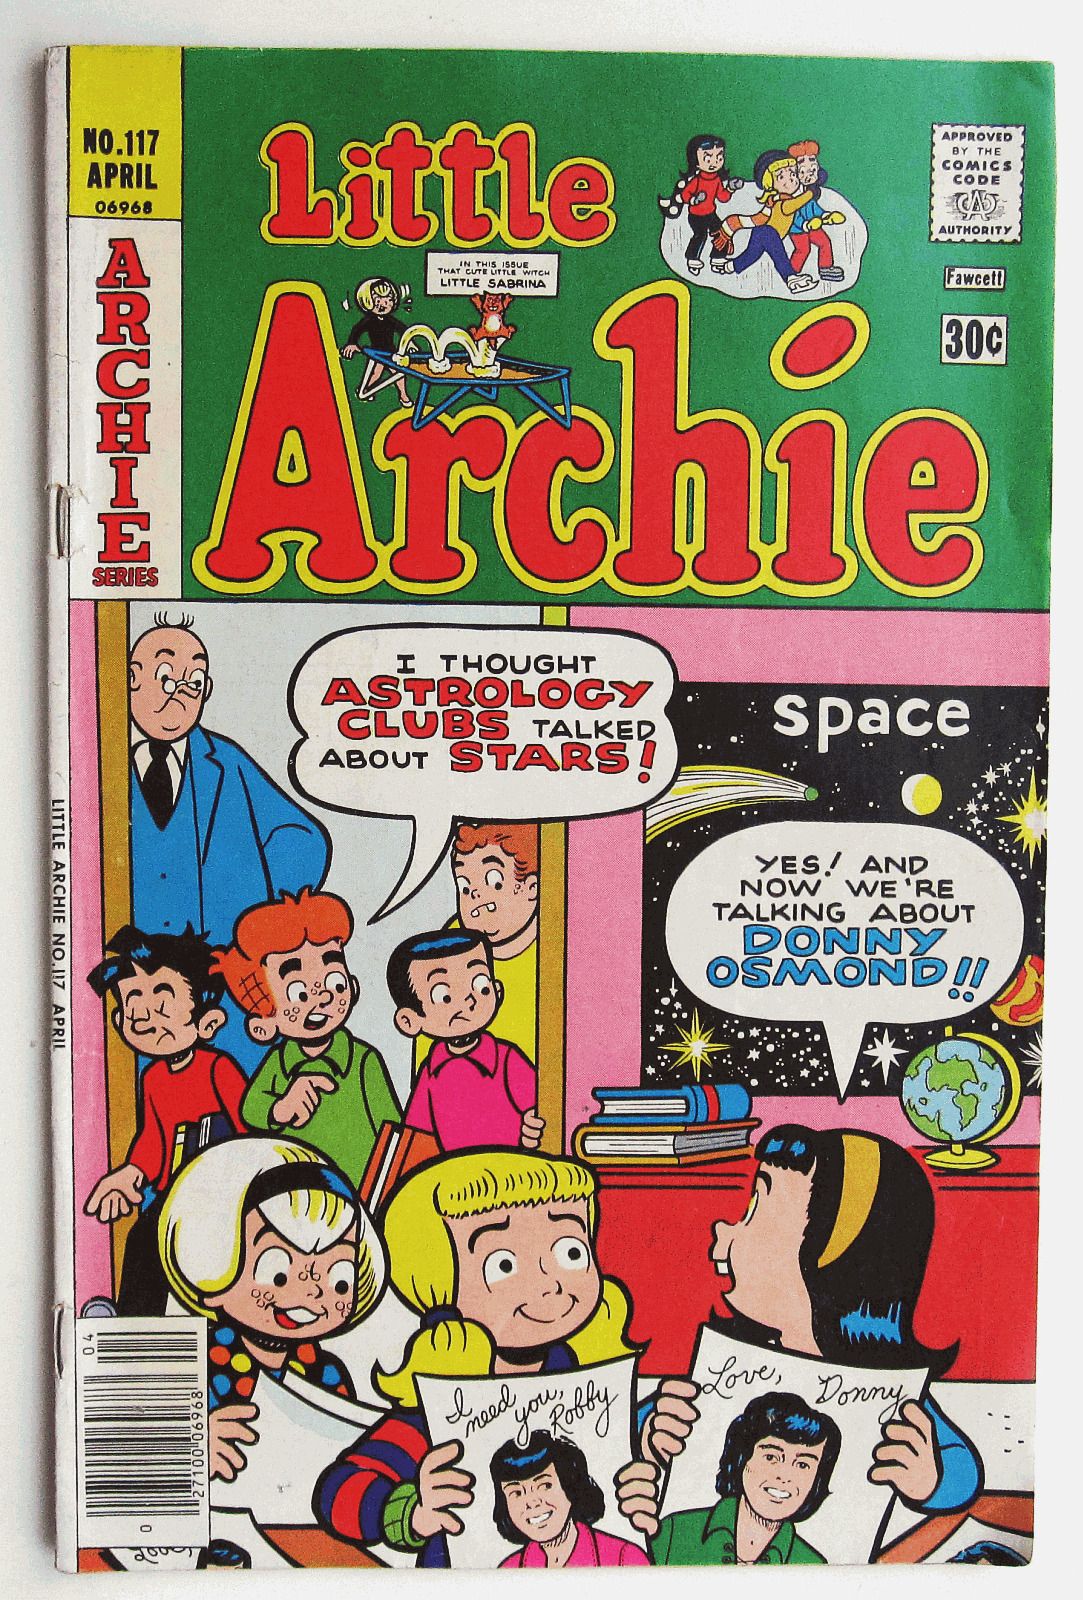 Little Archie #117 Comic Book April 1977 Very Good 4.0 Grade 